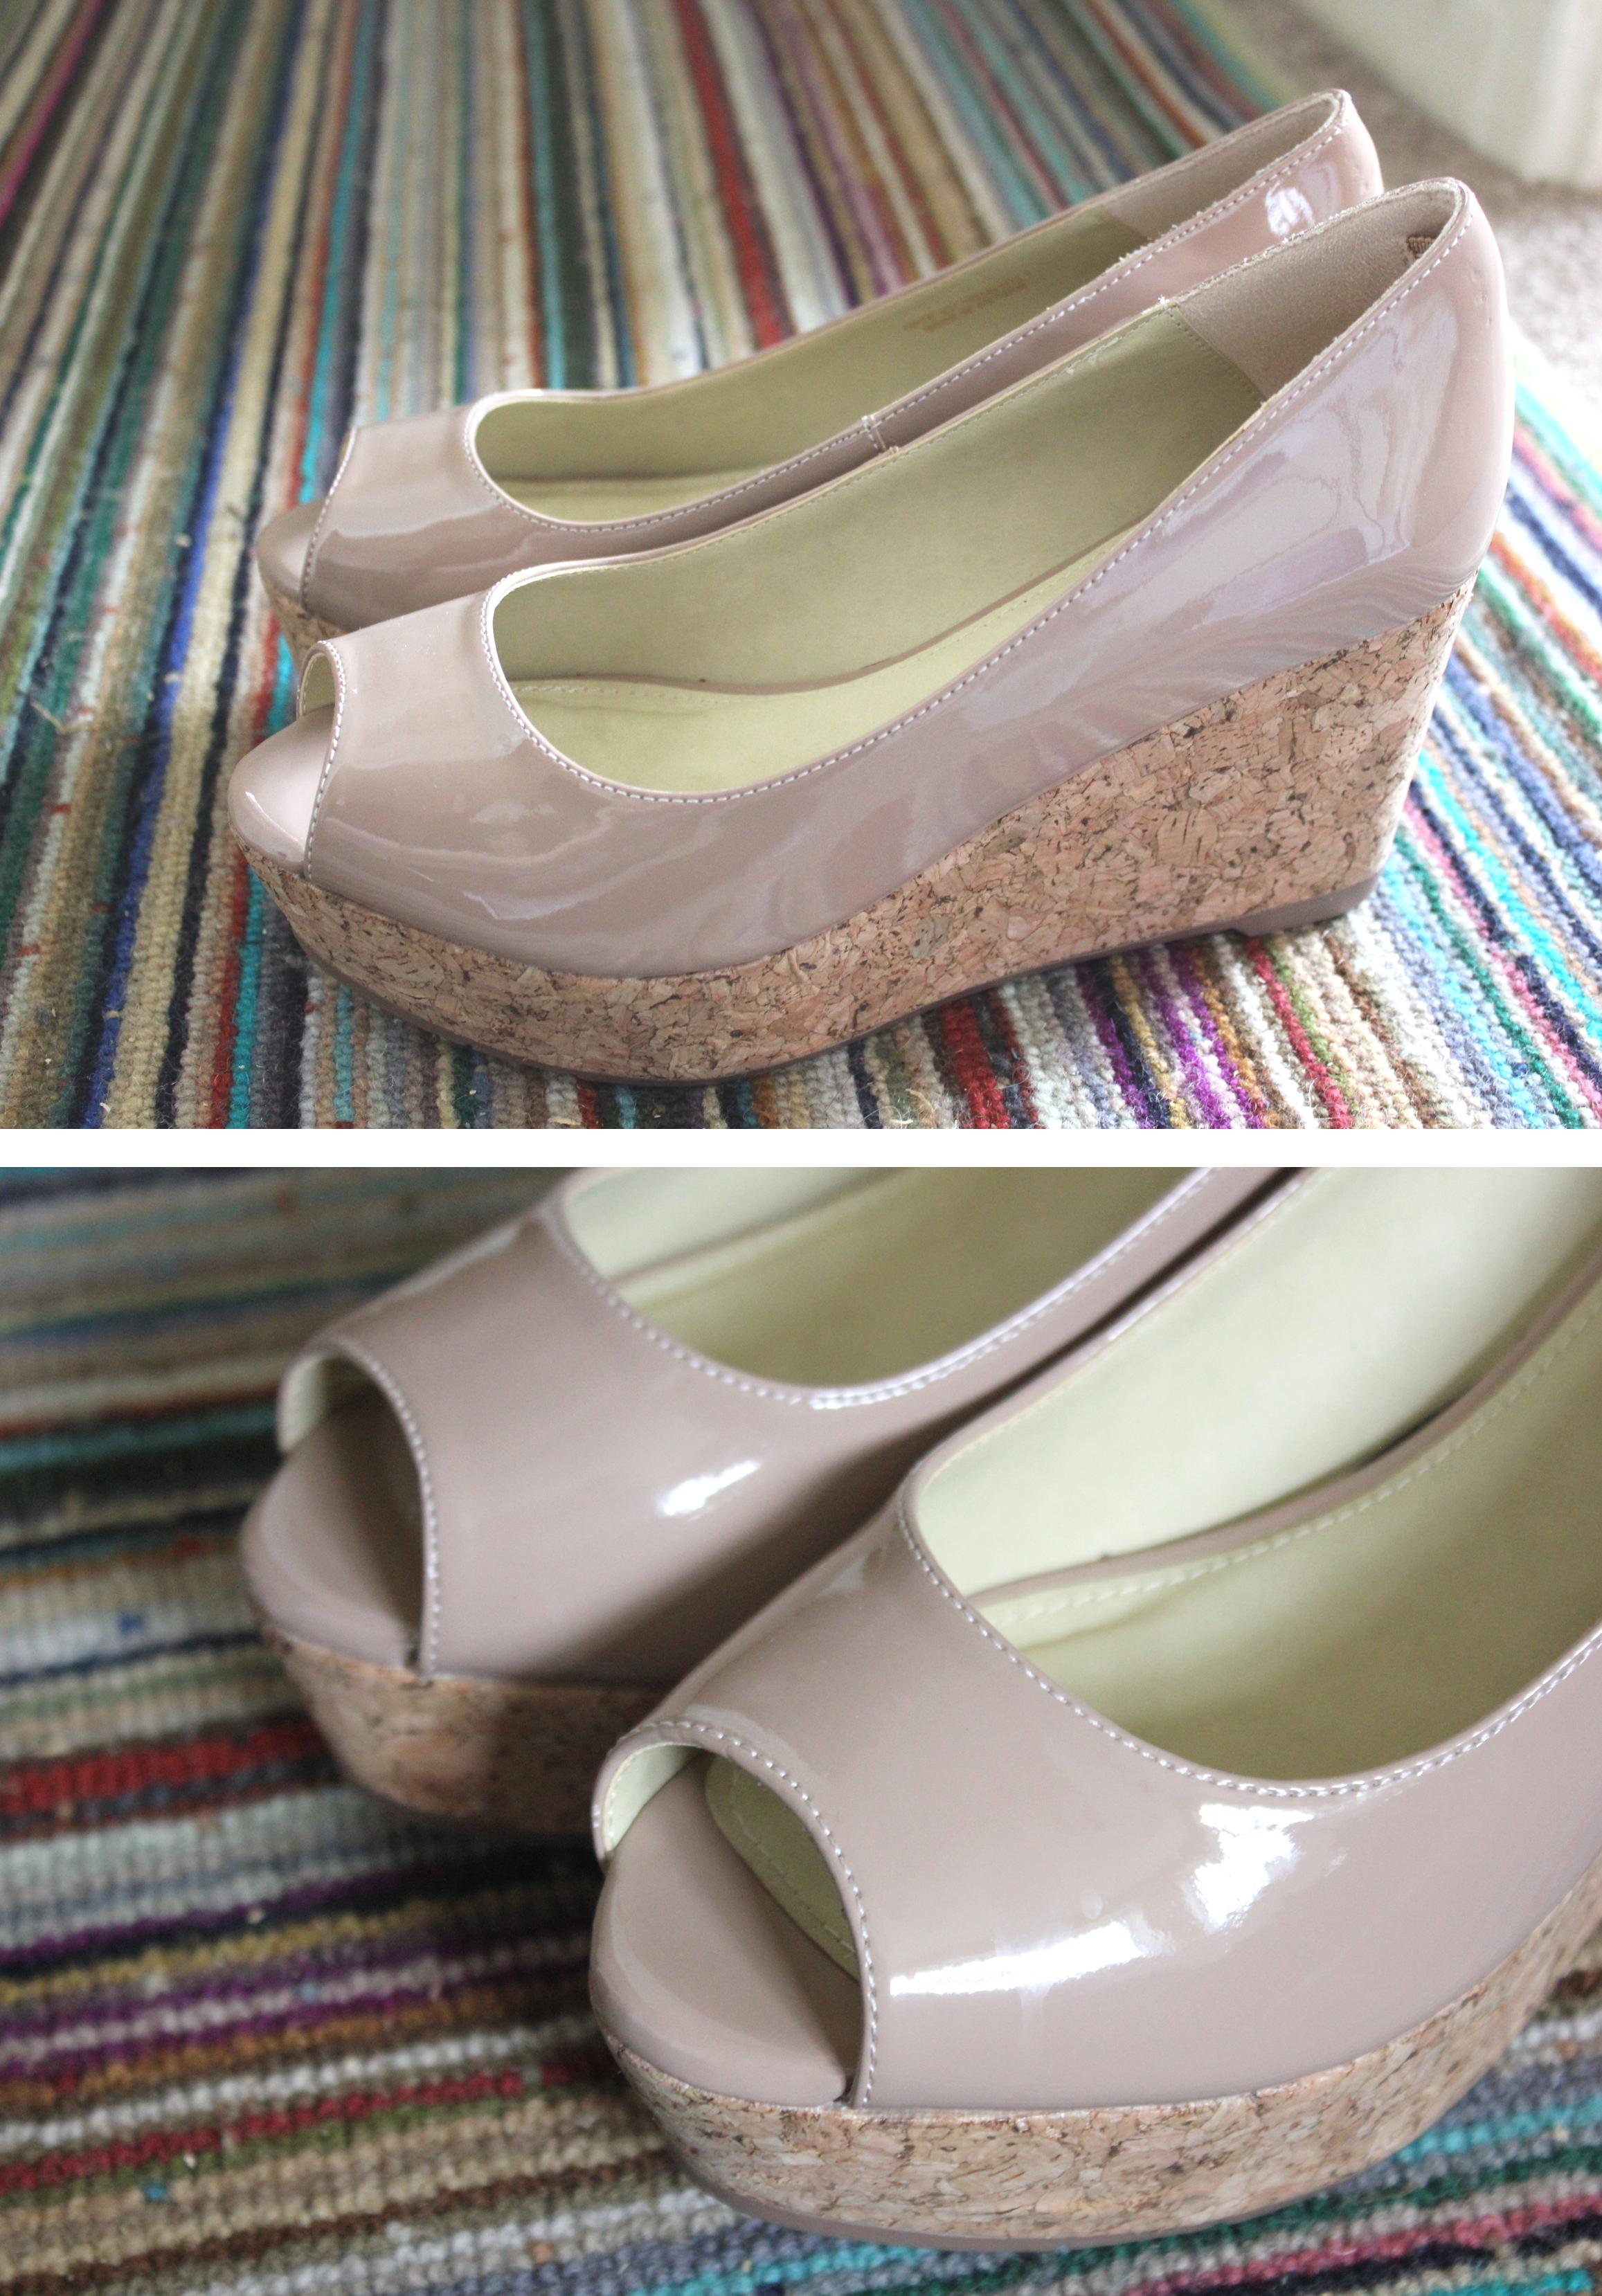 Women High Heels Pumps Round Toe Wedge Heel Platform Ankle Strap Shoes Size  5-15 | eBay